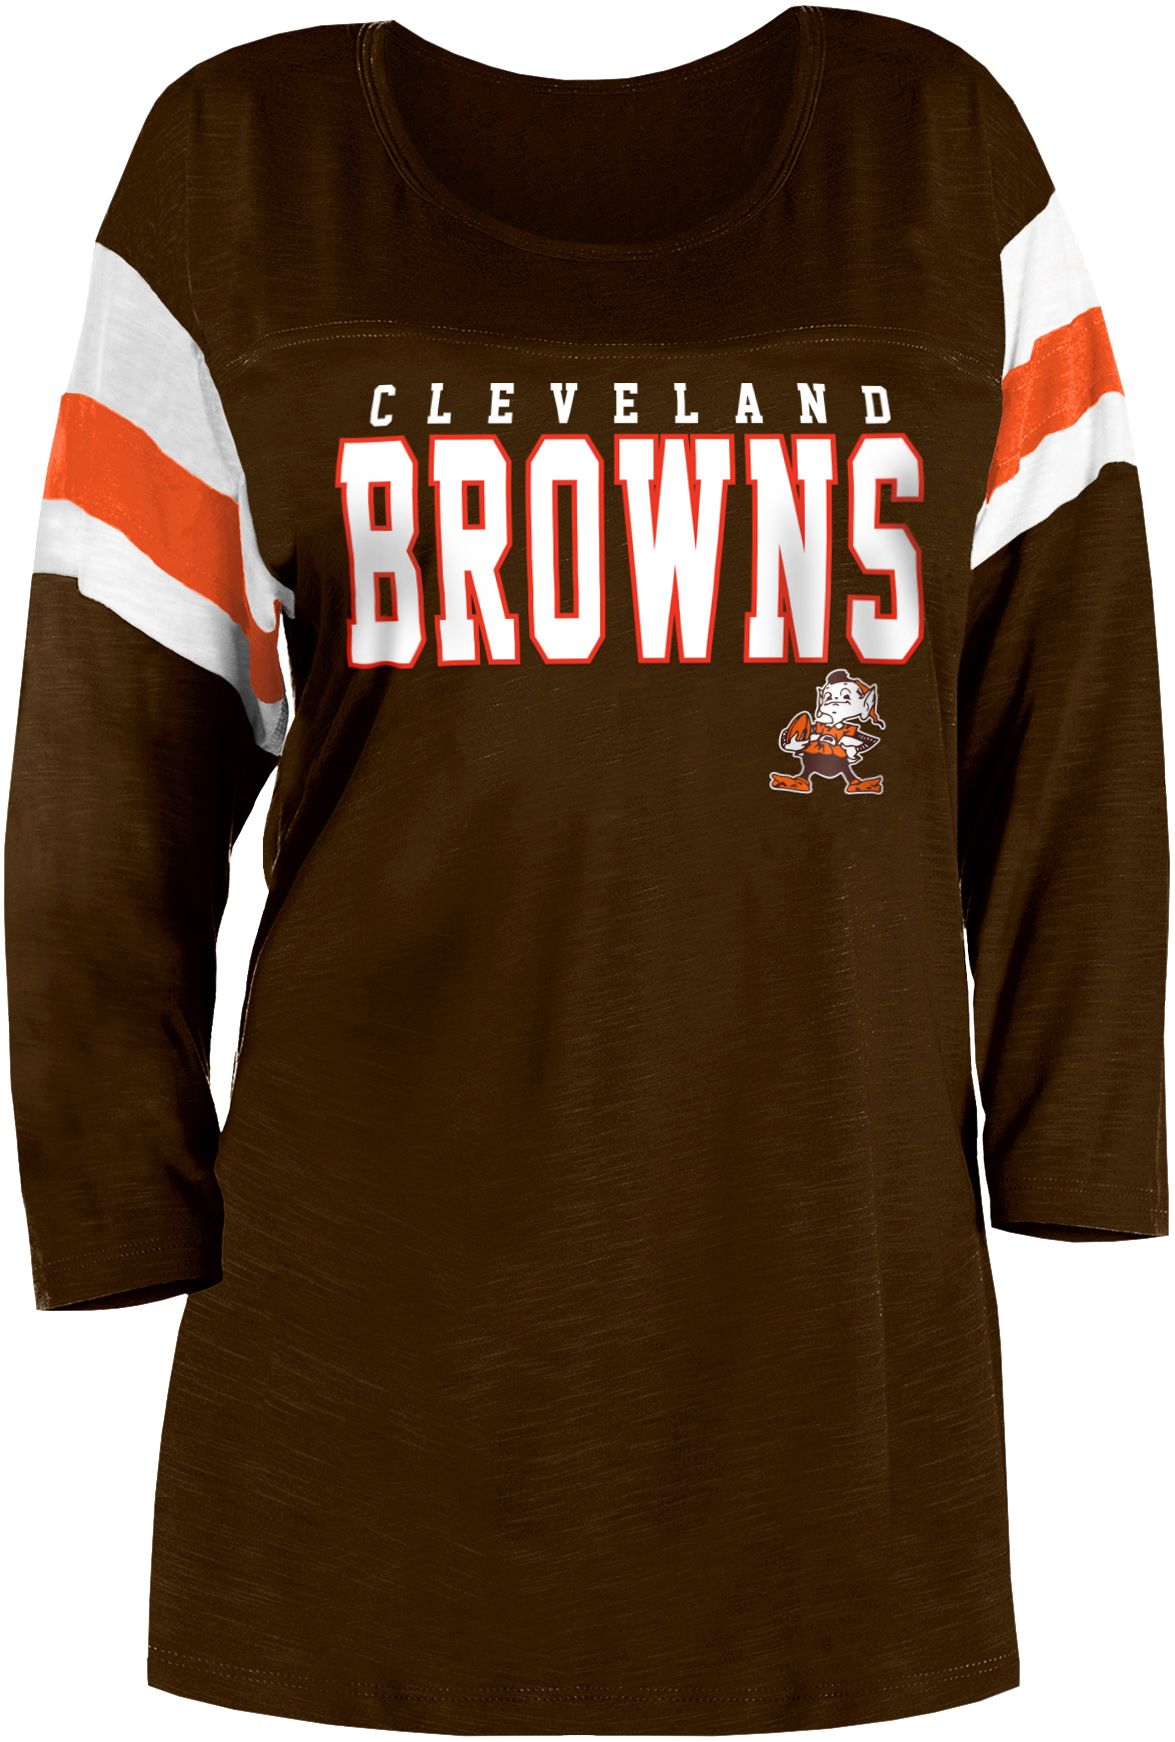 cleveland browns team apparel